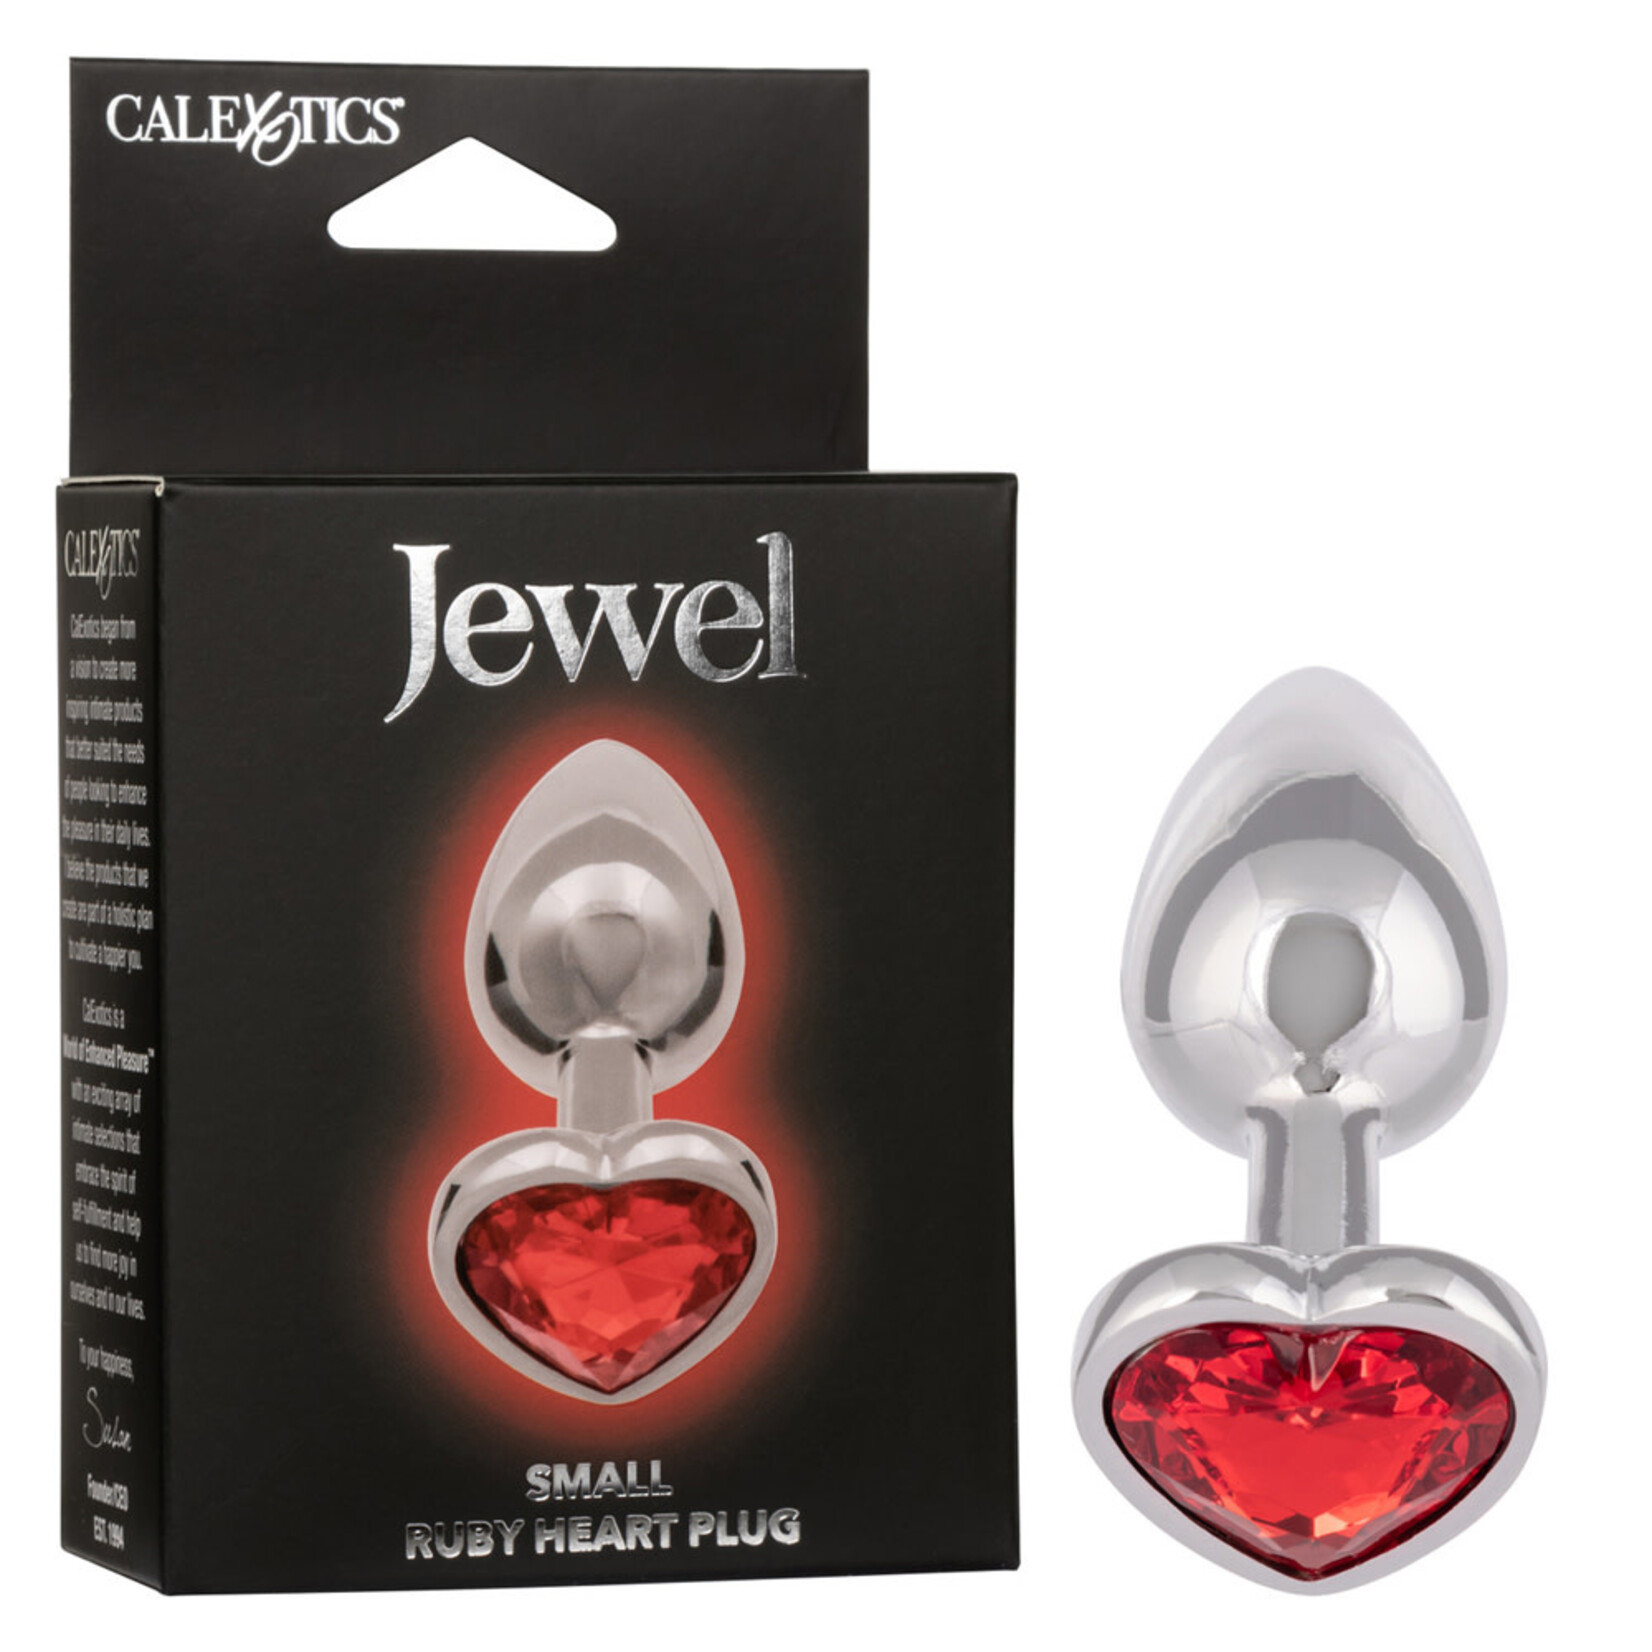 CALEXOTICS JEWEL SMALL RUBY HEART PLUG